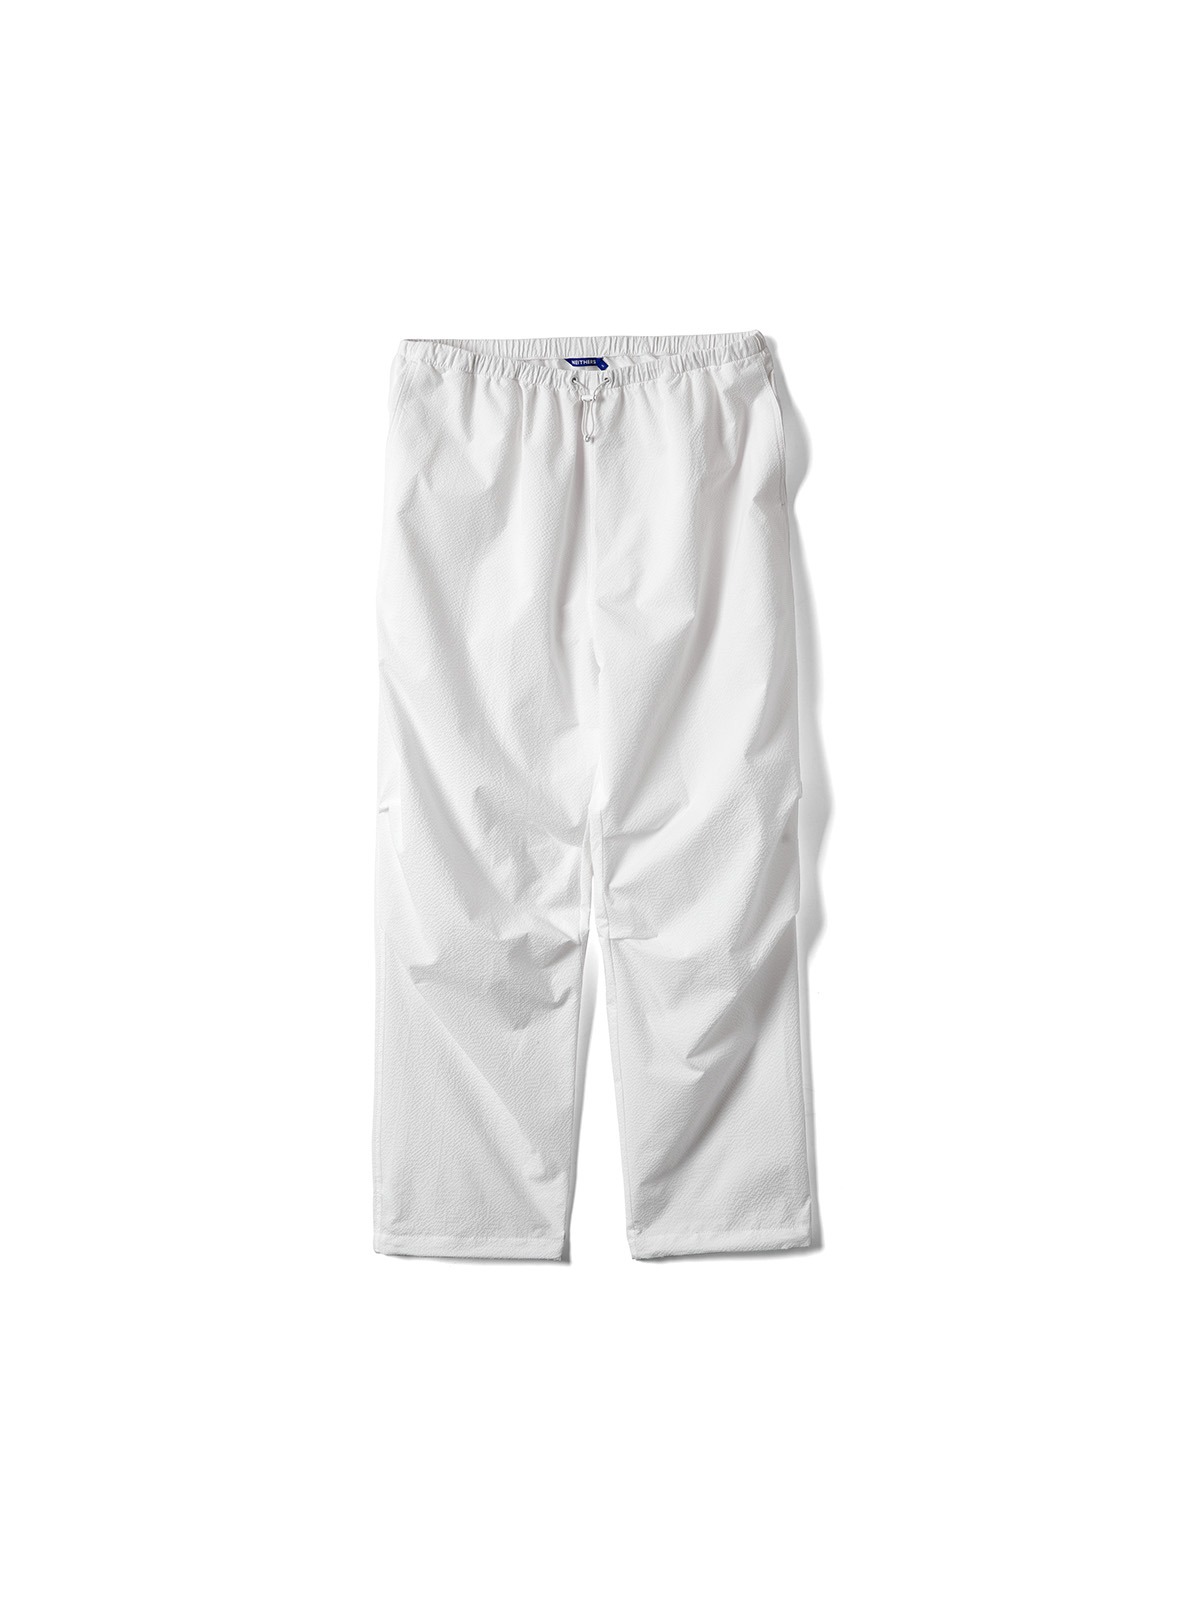 Camper Pants (Off White)